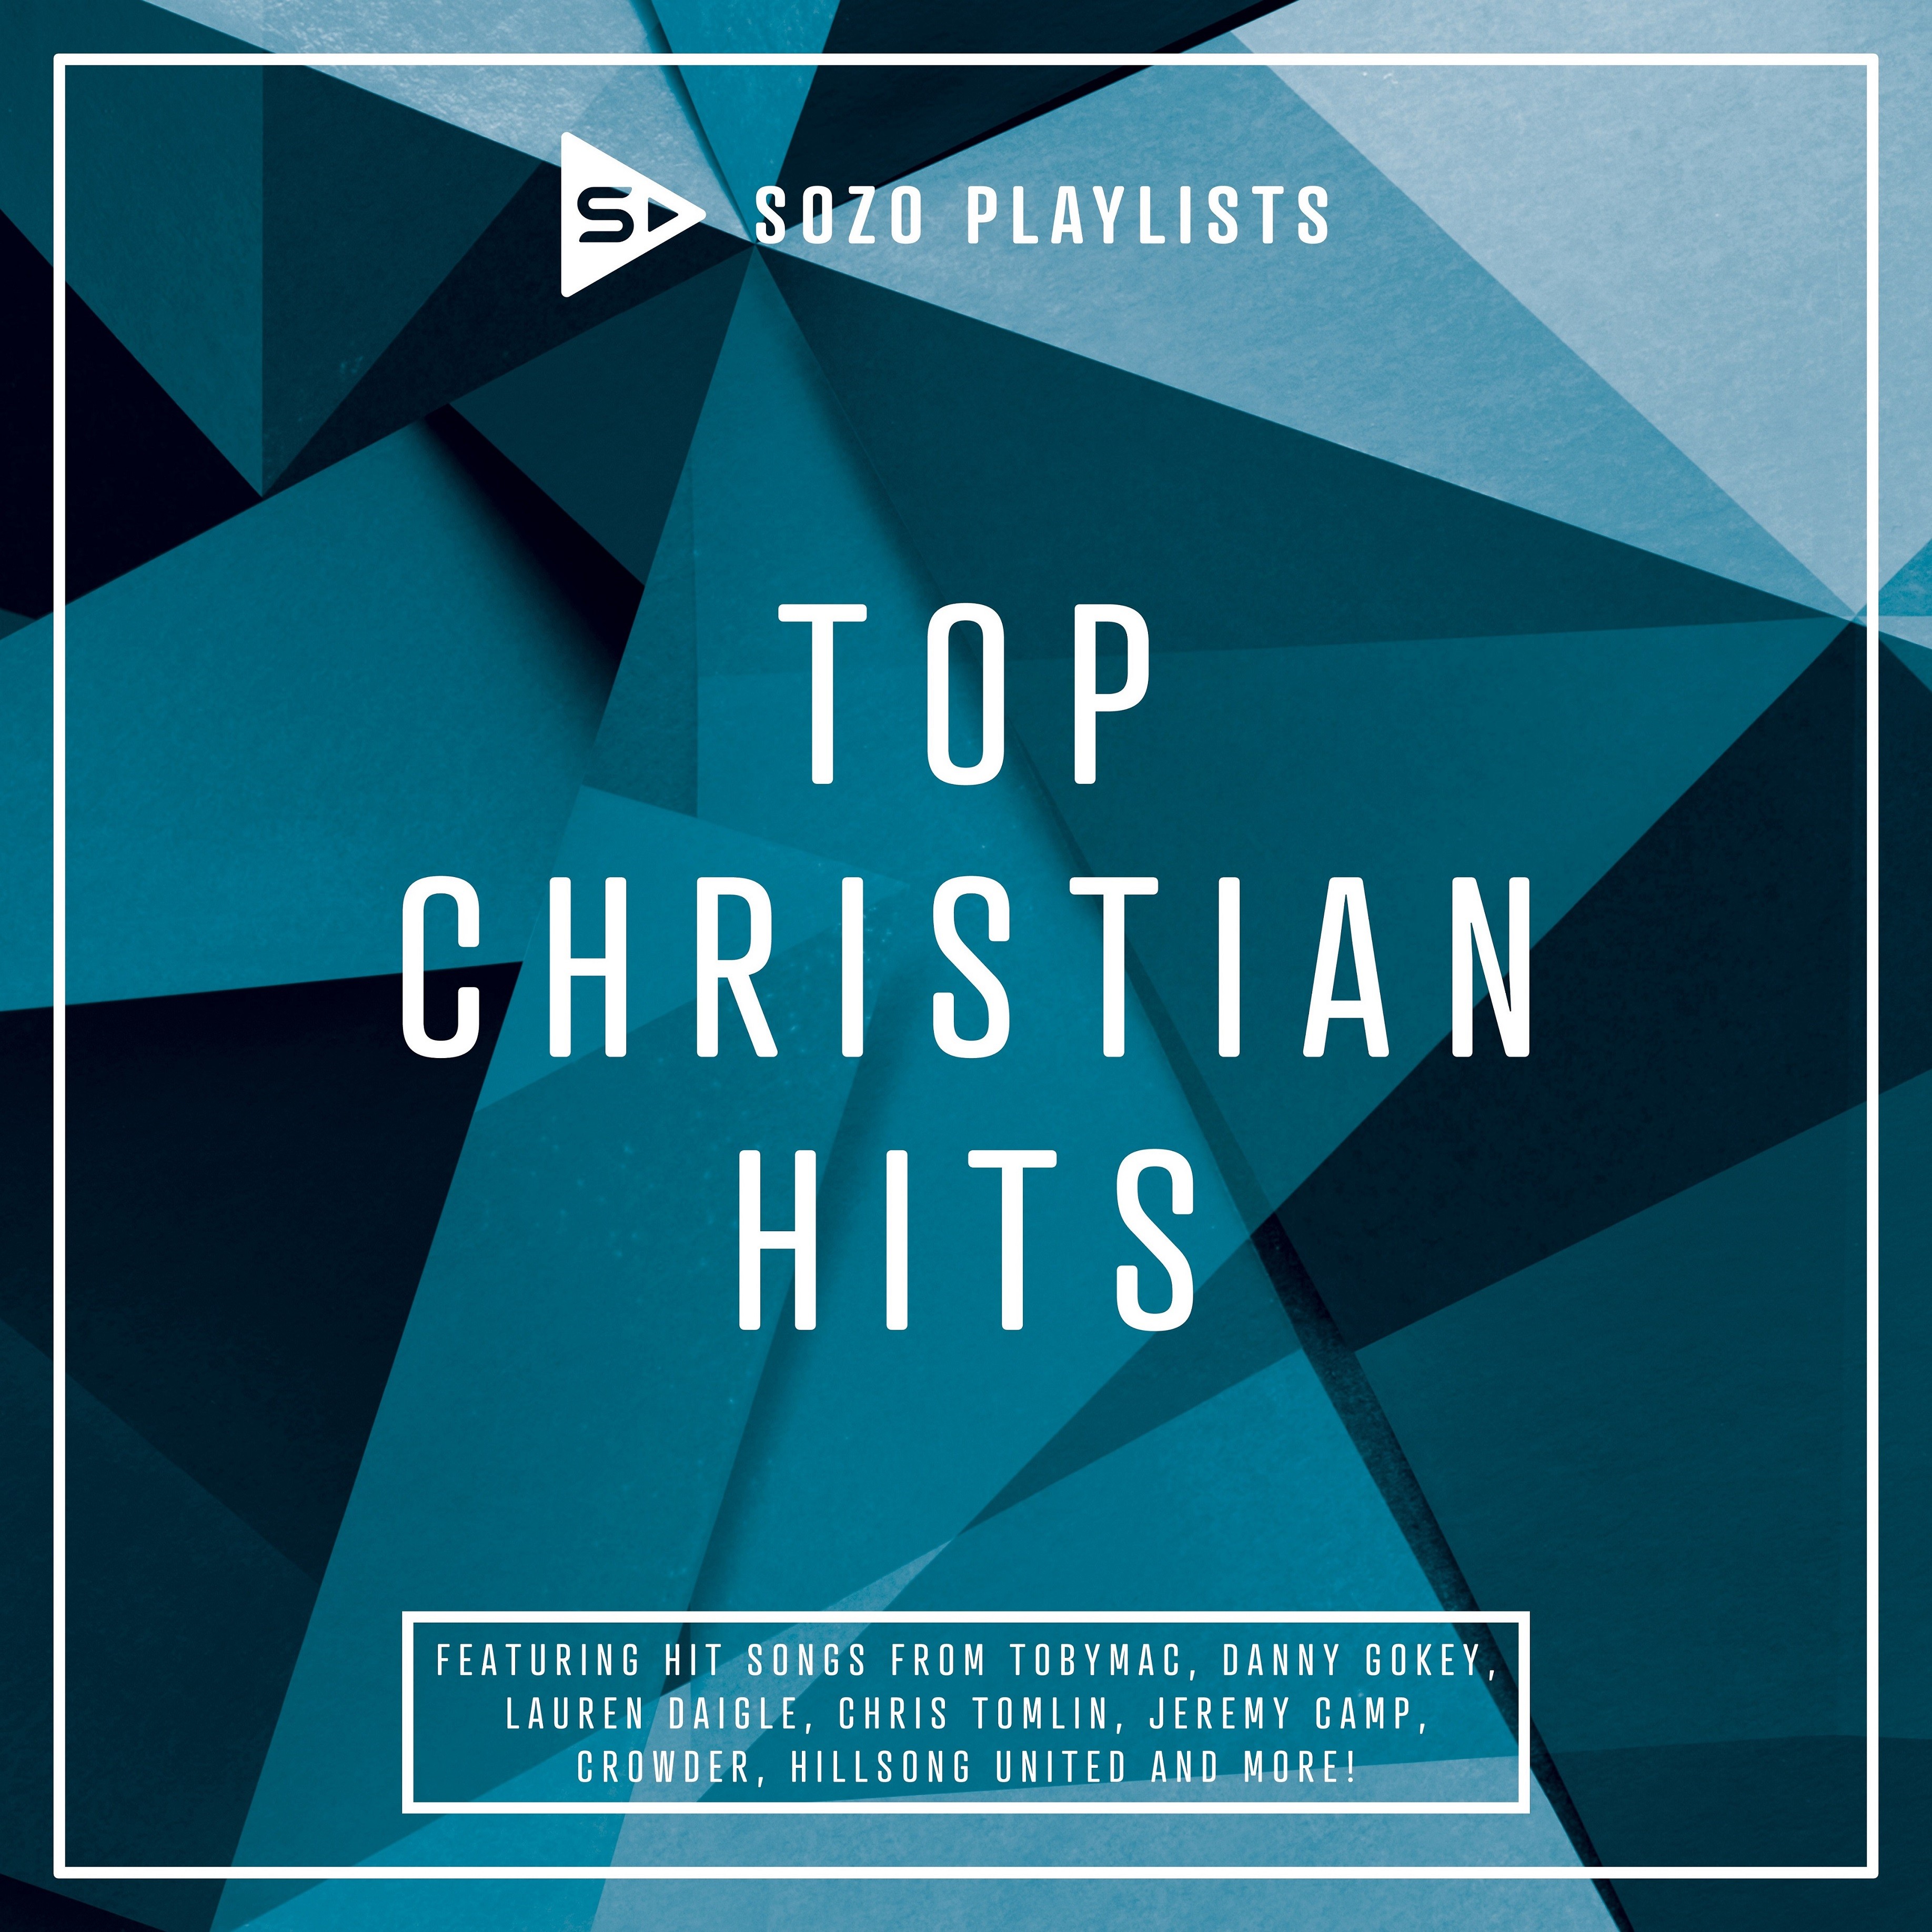 SOZO Playlists Top Christian Hits Eden.co.uk